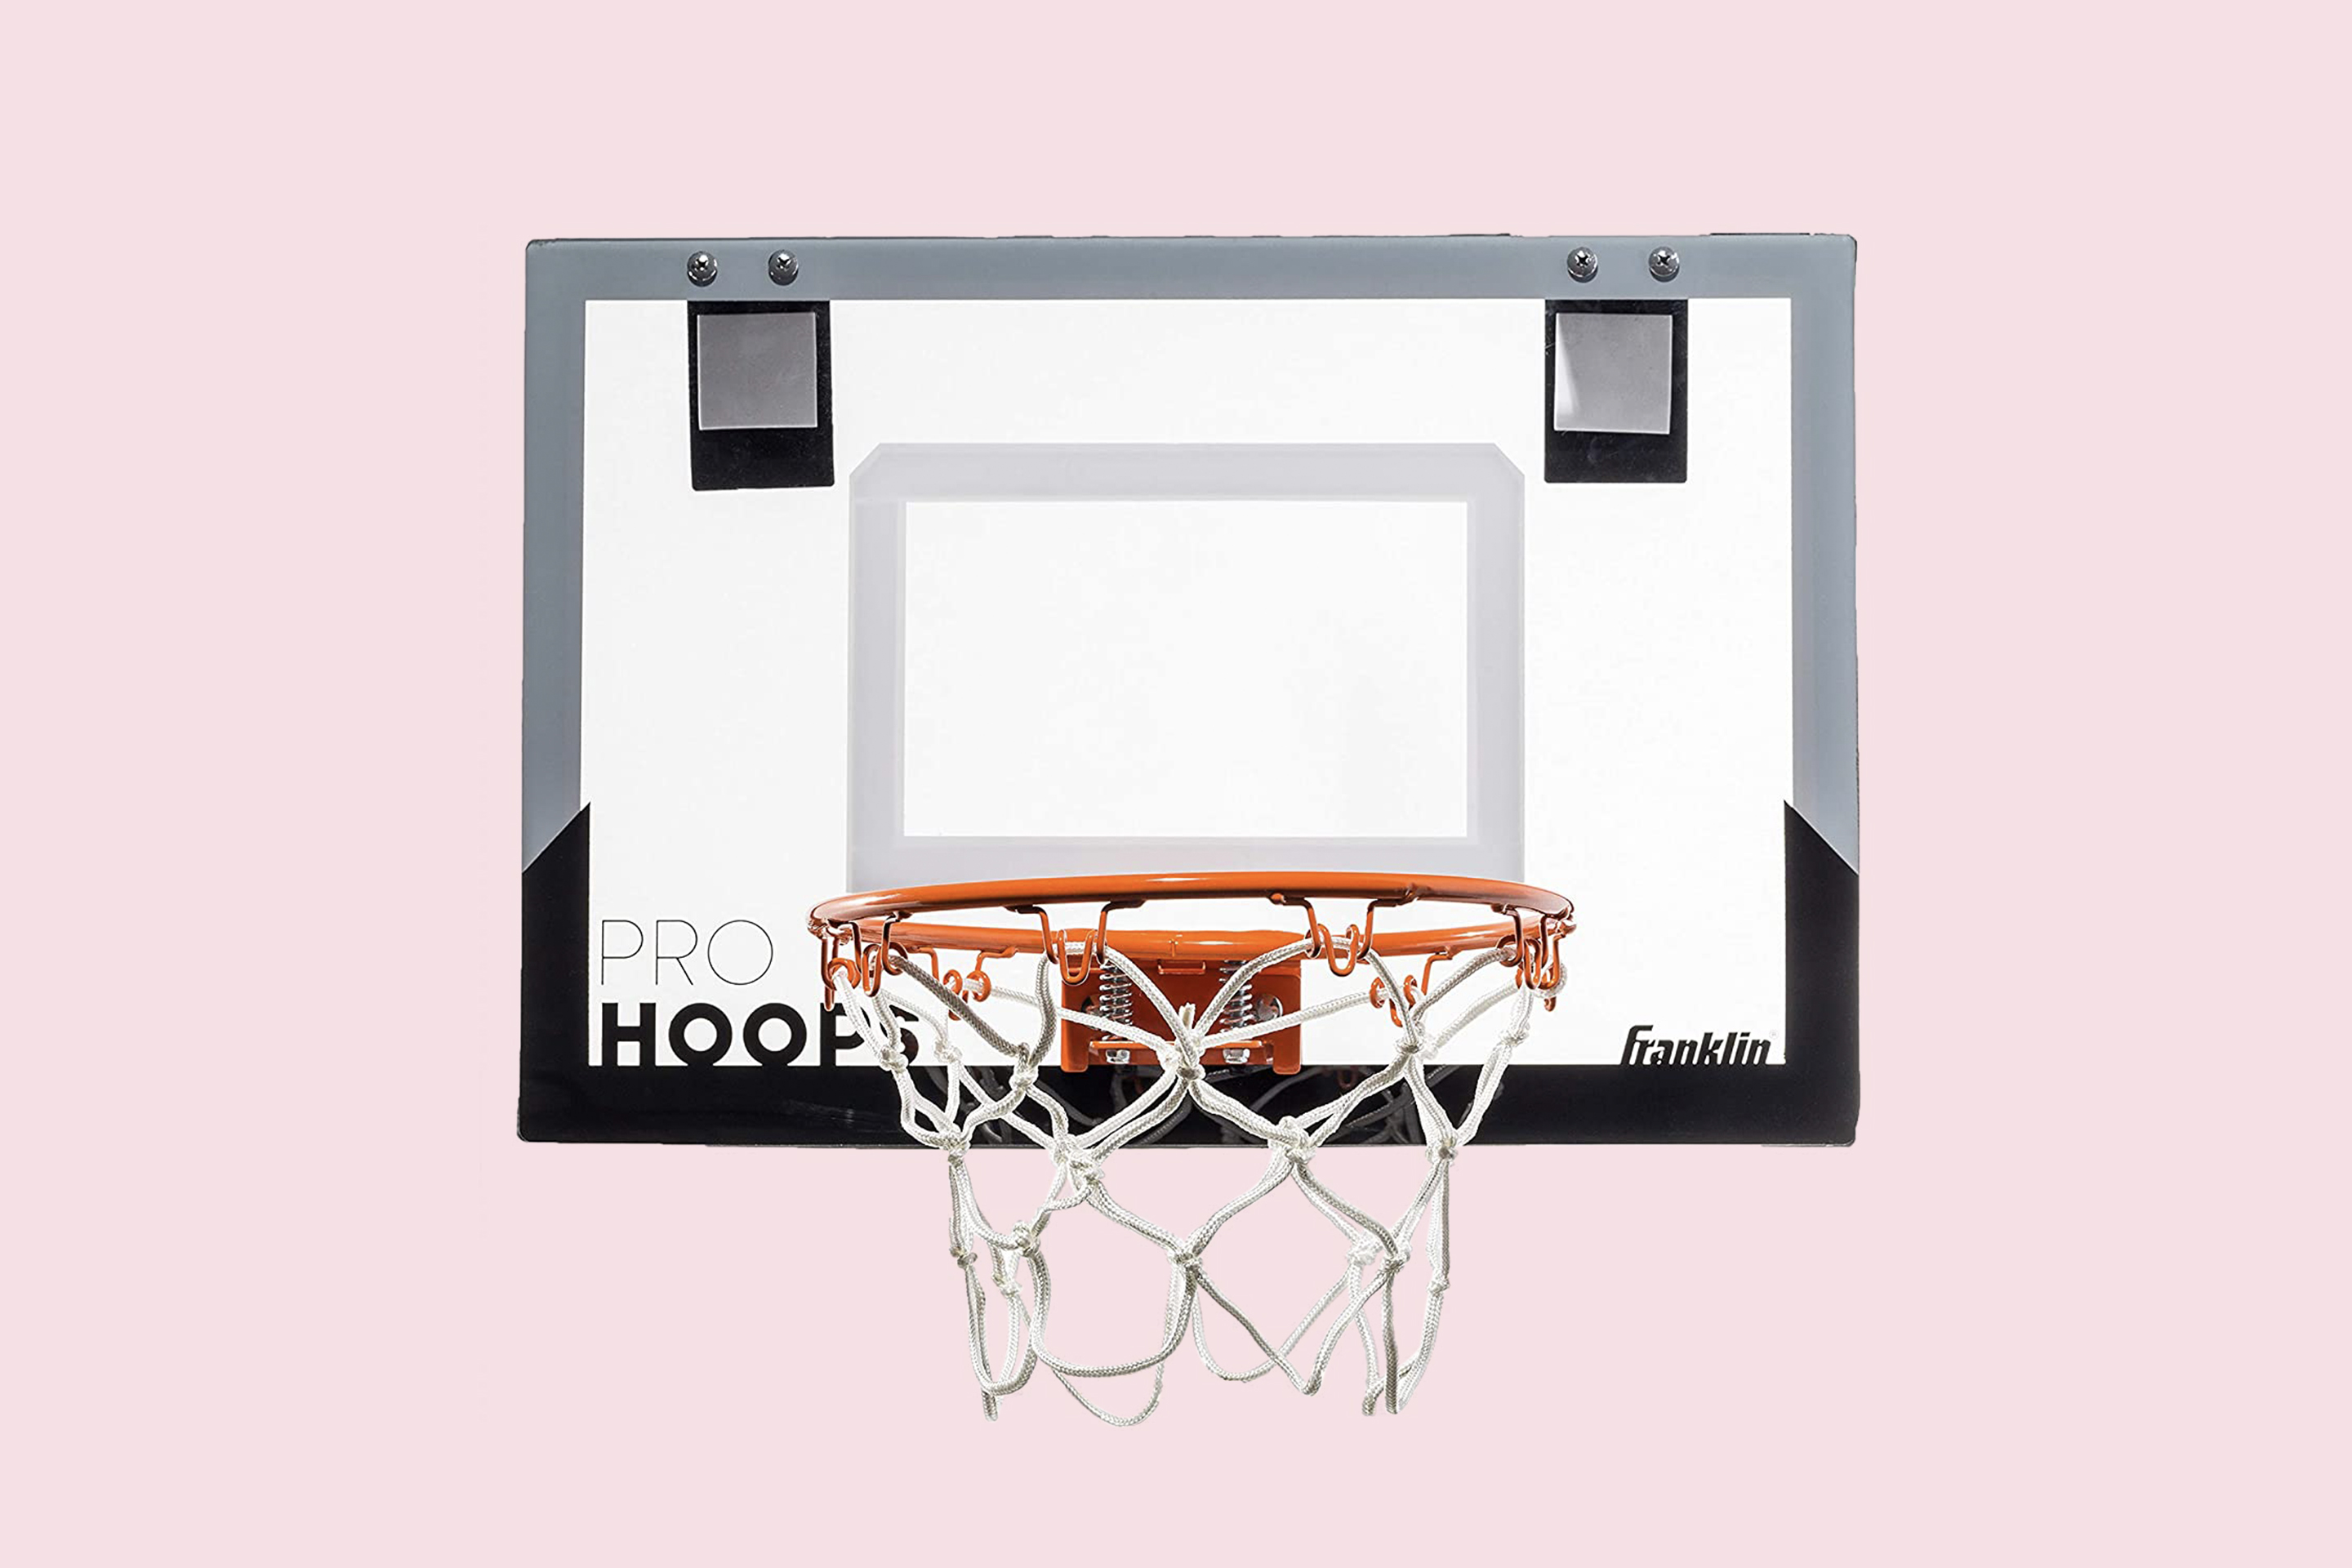 Mini Basketball – Apps no Google Play